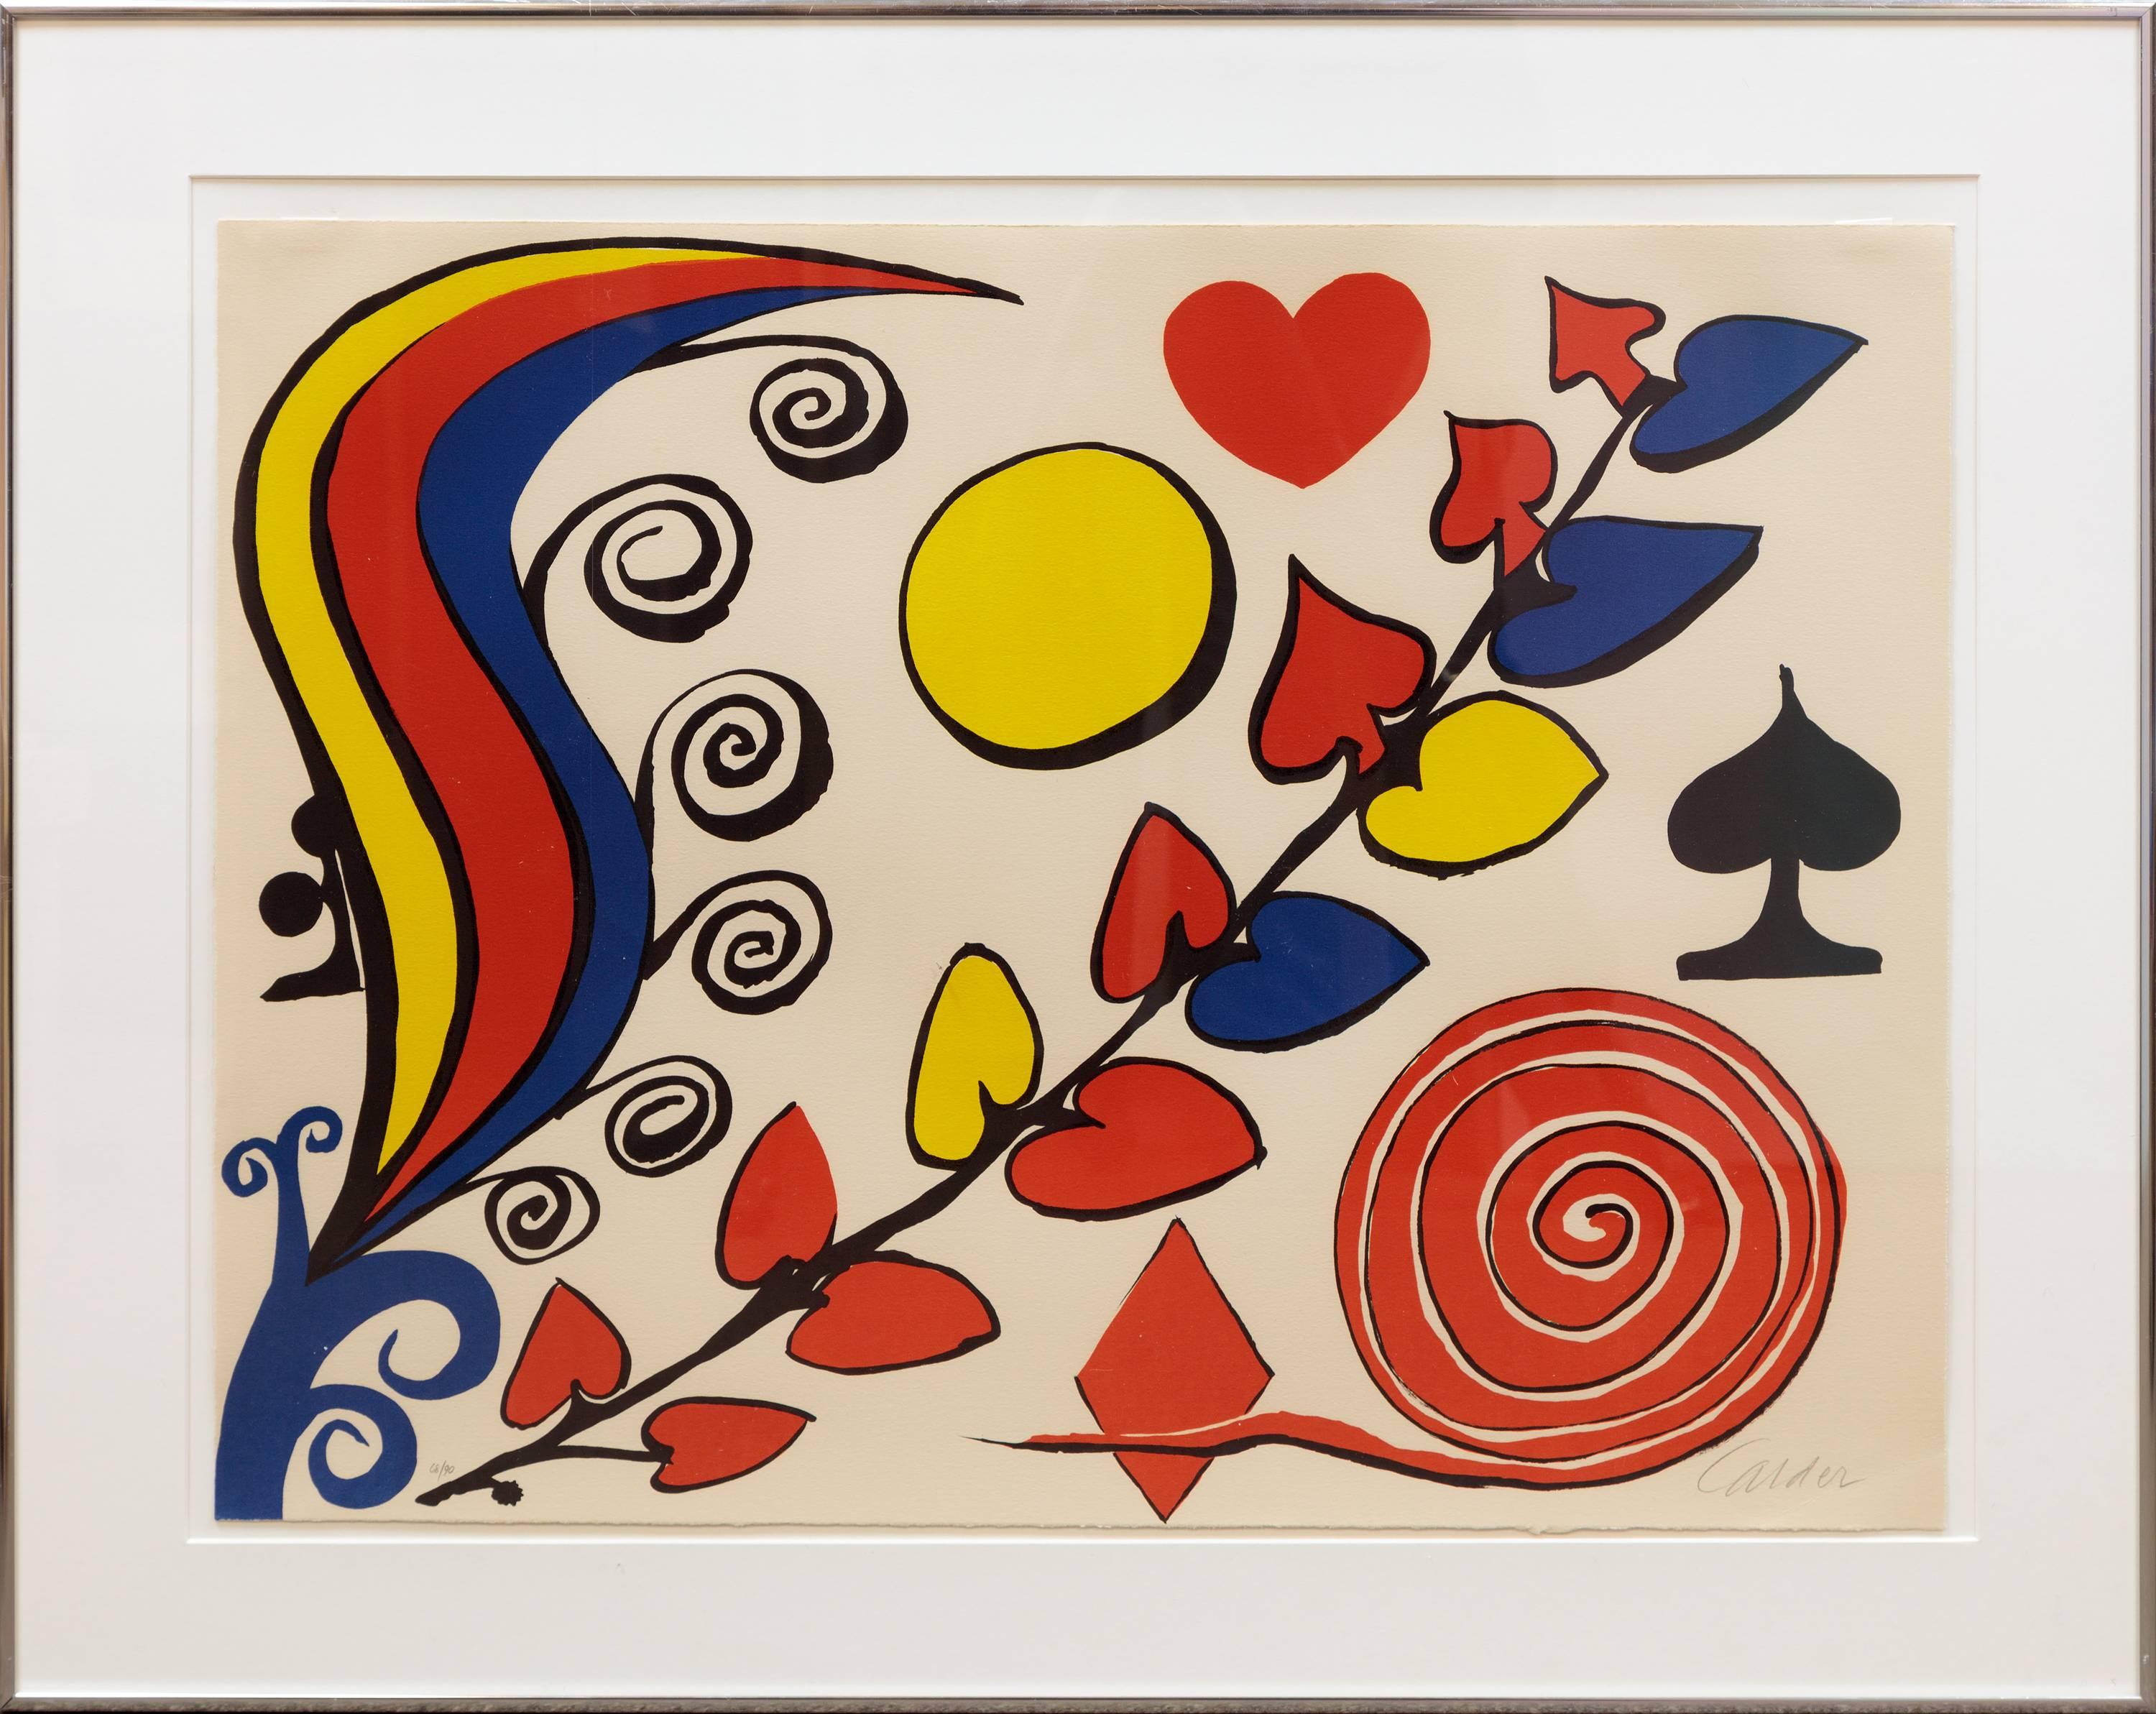 Les Fleurs - Untitled (Spades, Hearts, Diamonds, Clubs) - Post-War Print by Alexander Calder